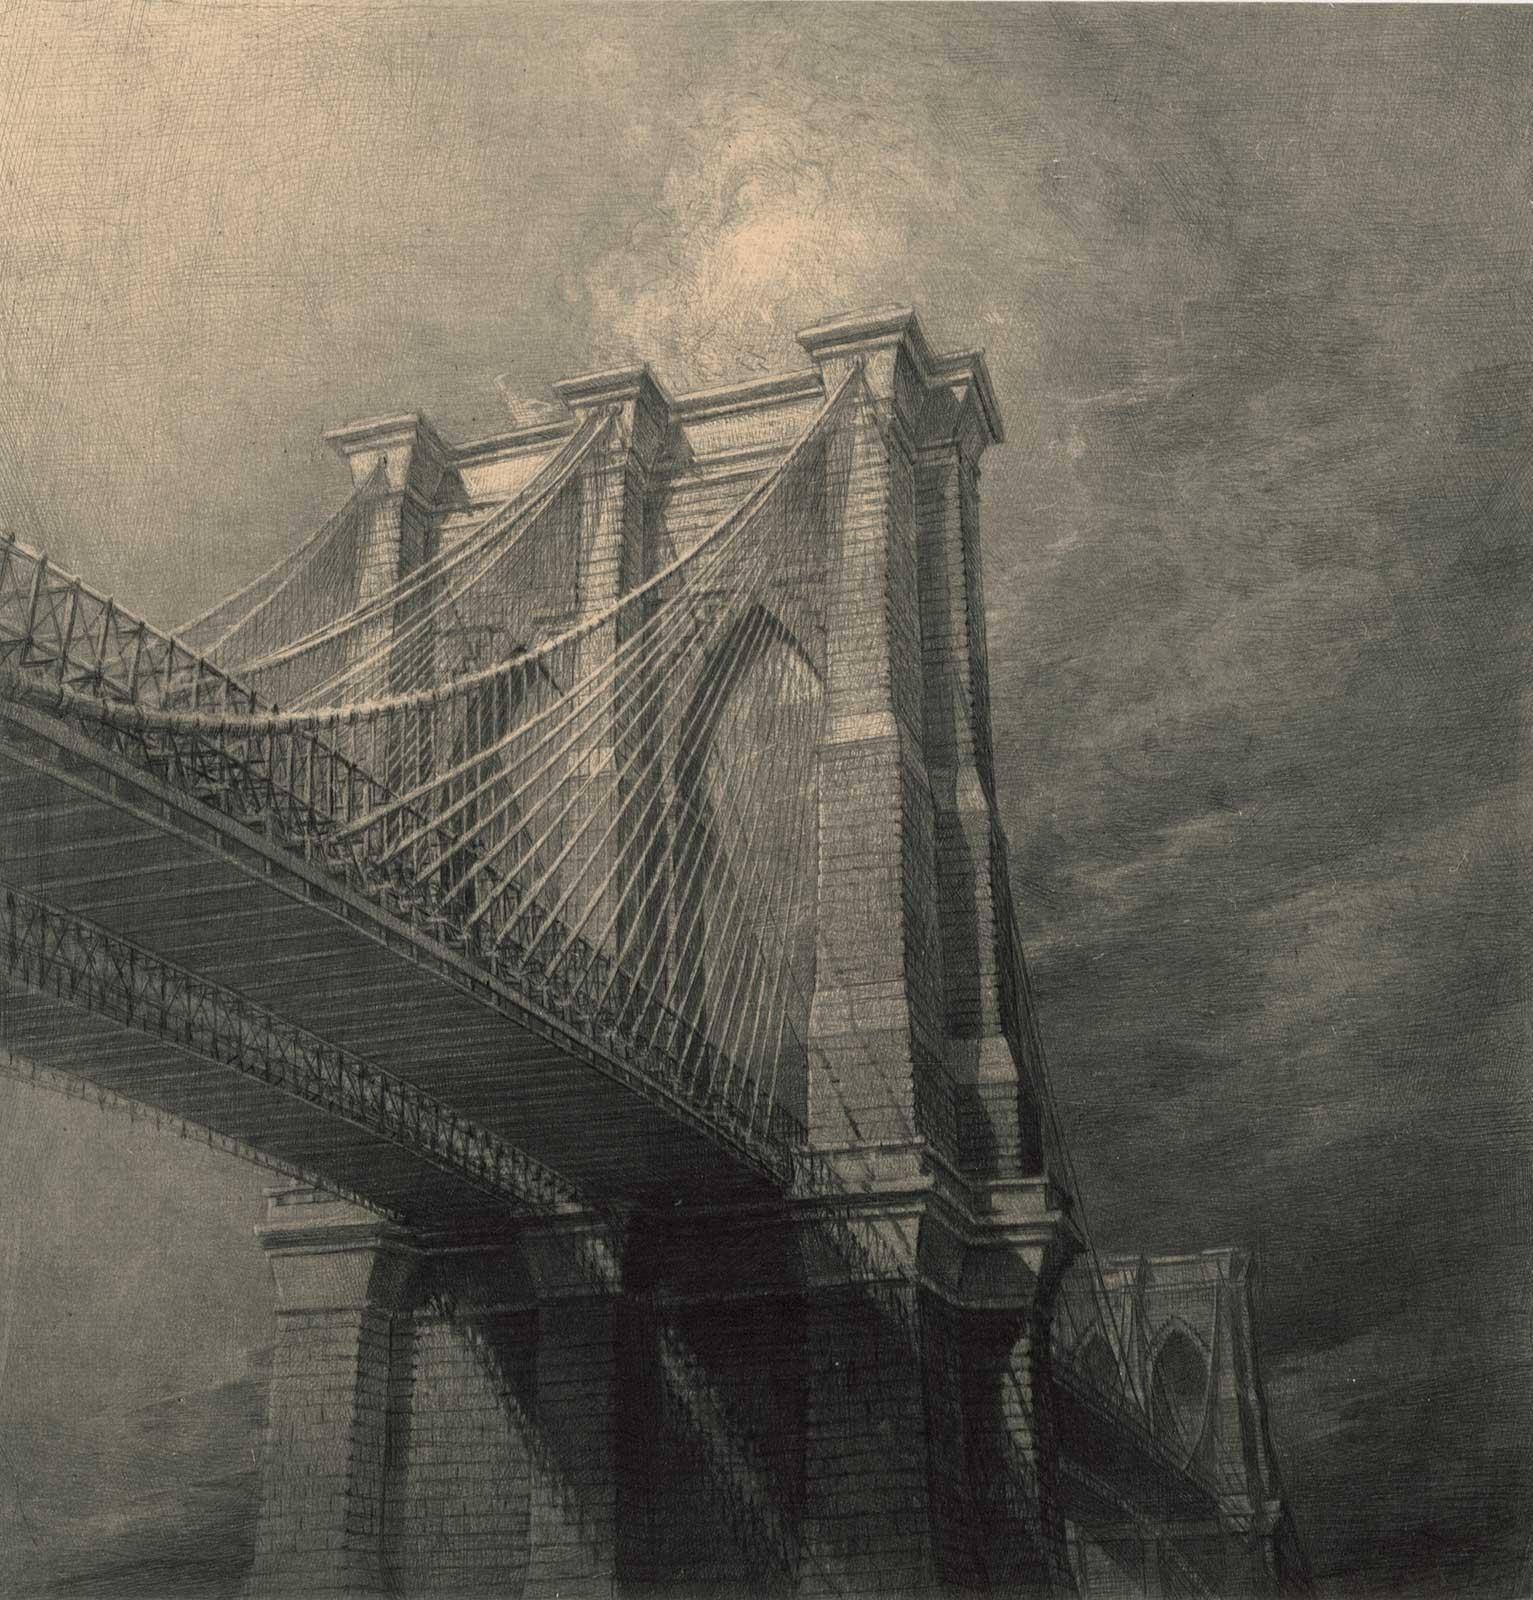 Jean Michel Mathieux-Marie Landscape Print - The Brooklyn Bridge (view of Brooklyn Bridge pylons from below the bridge)